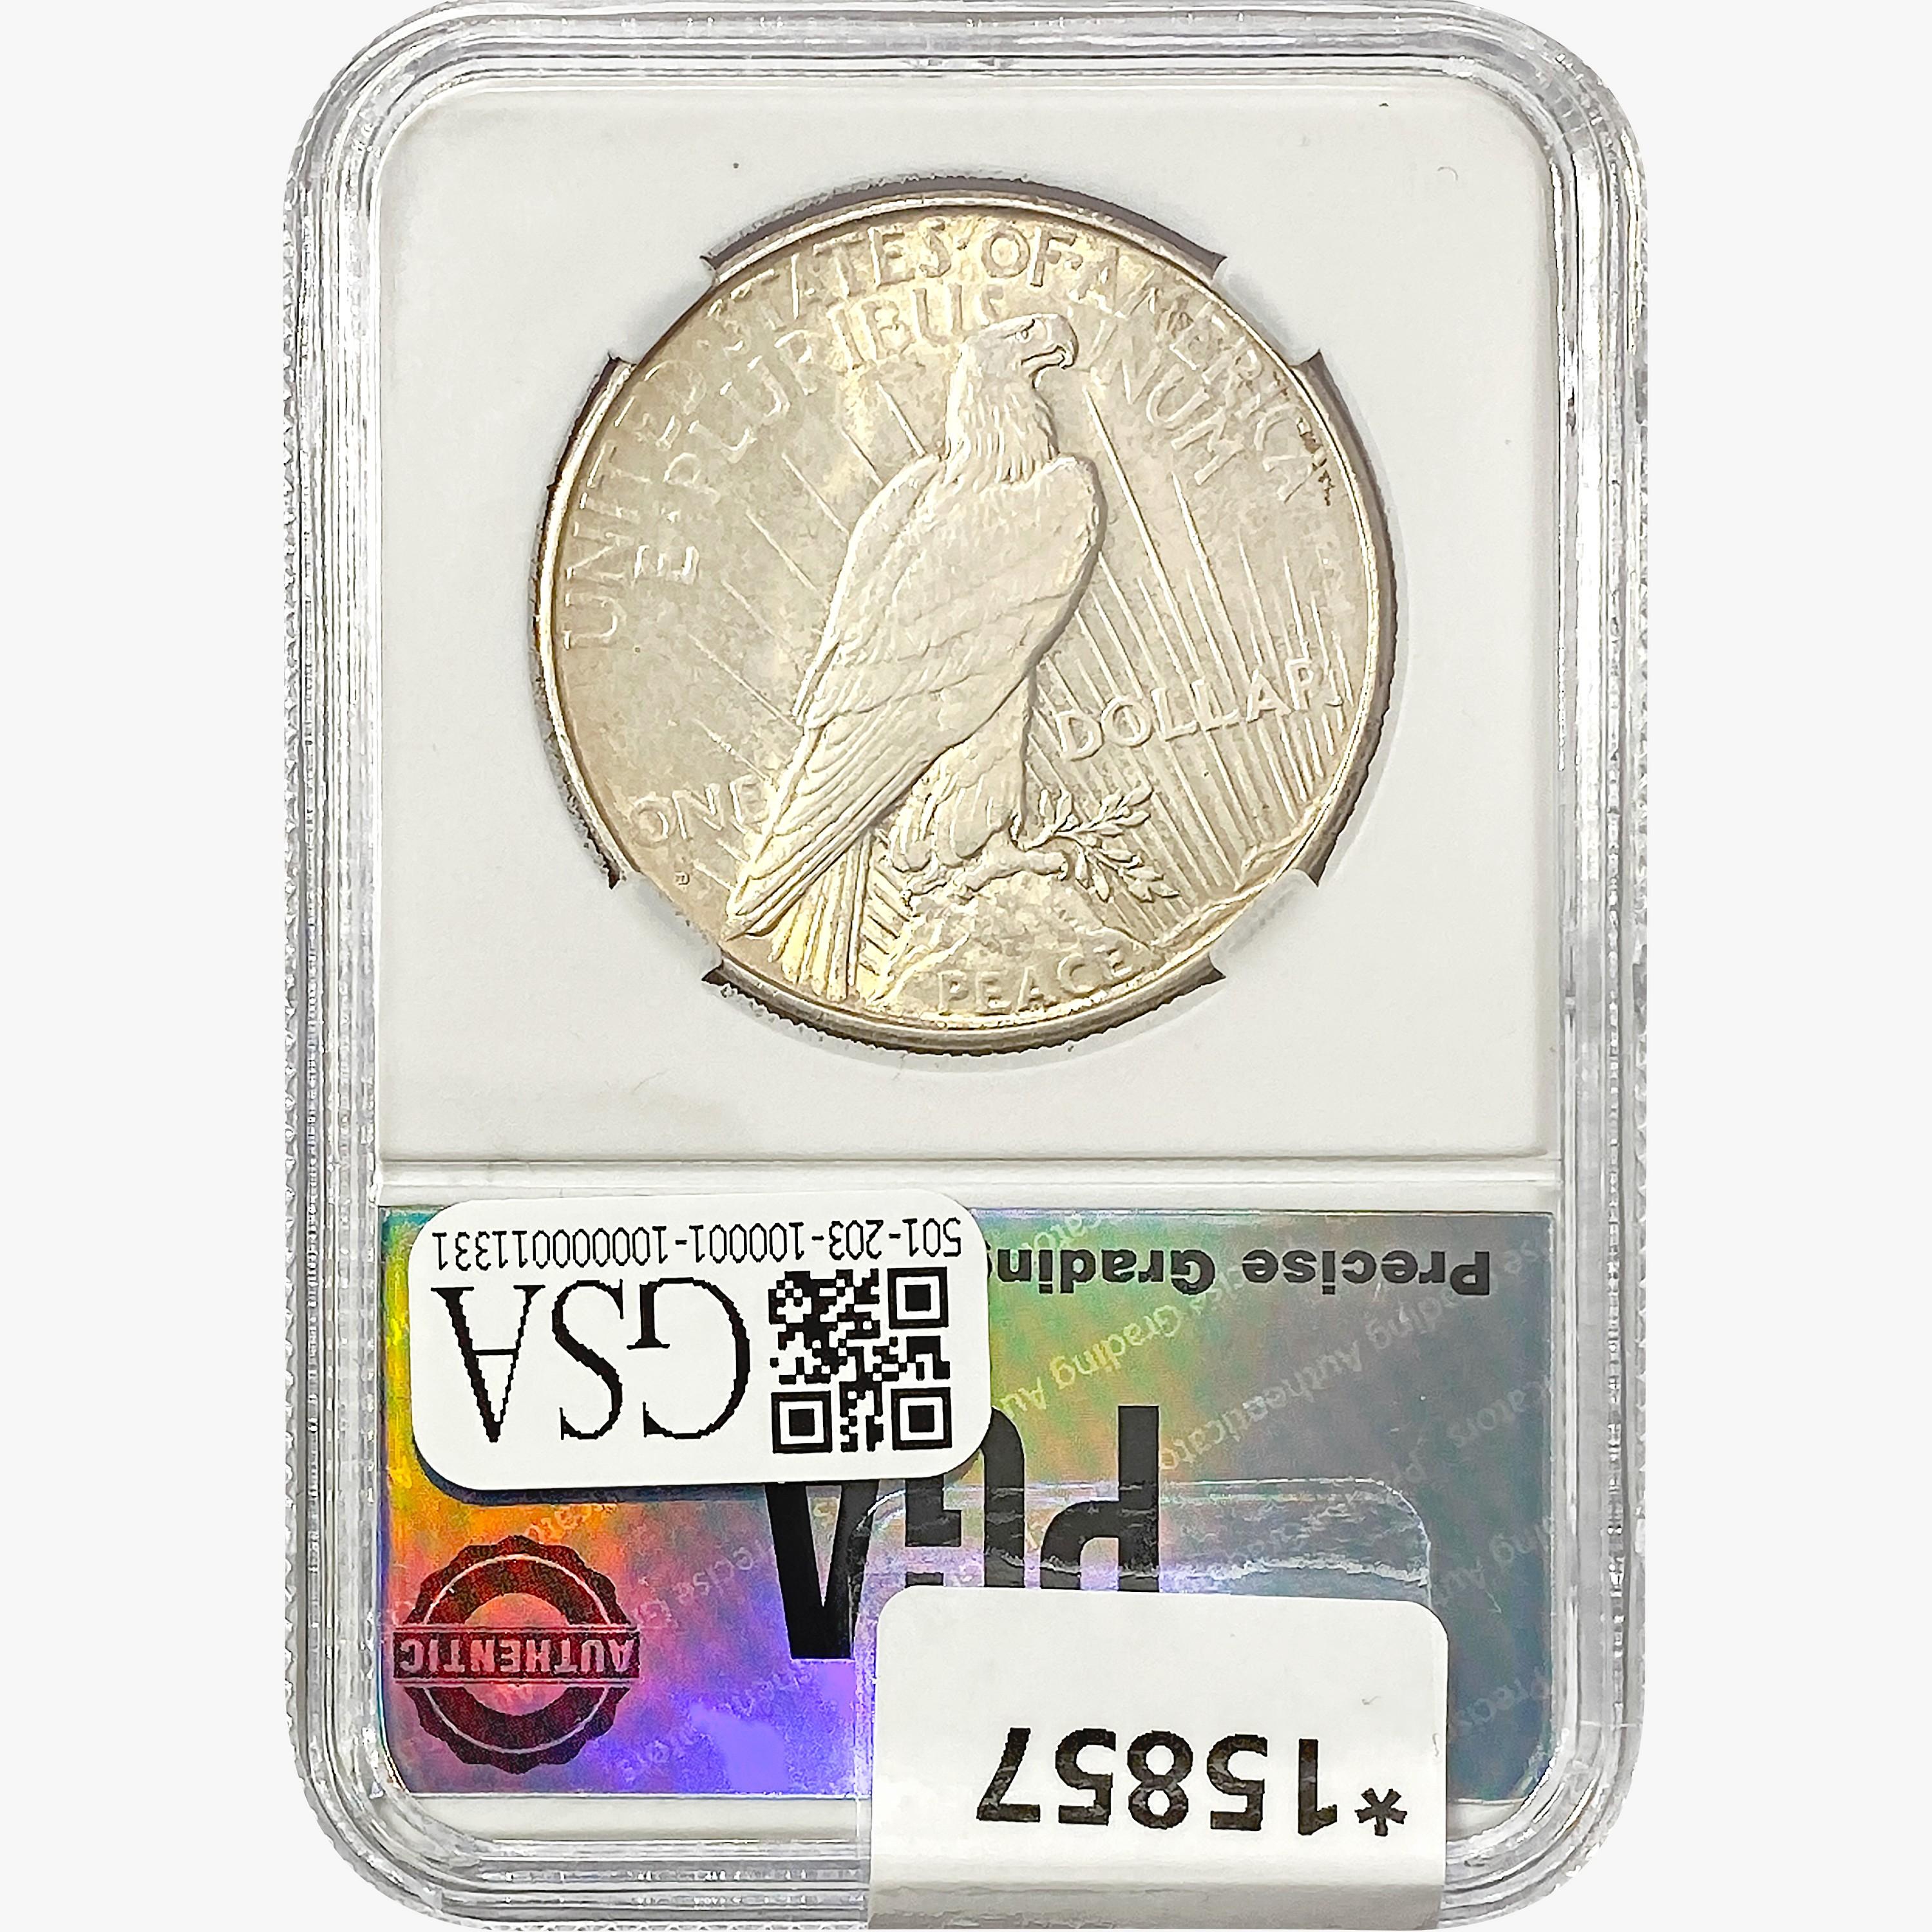 1934-D Silver Peace Dollar PGA MS64+